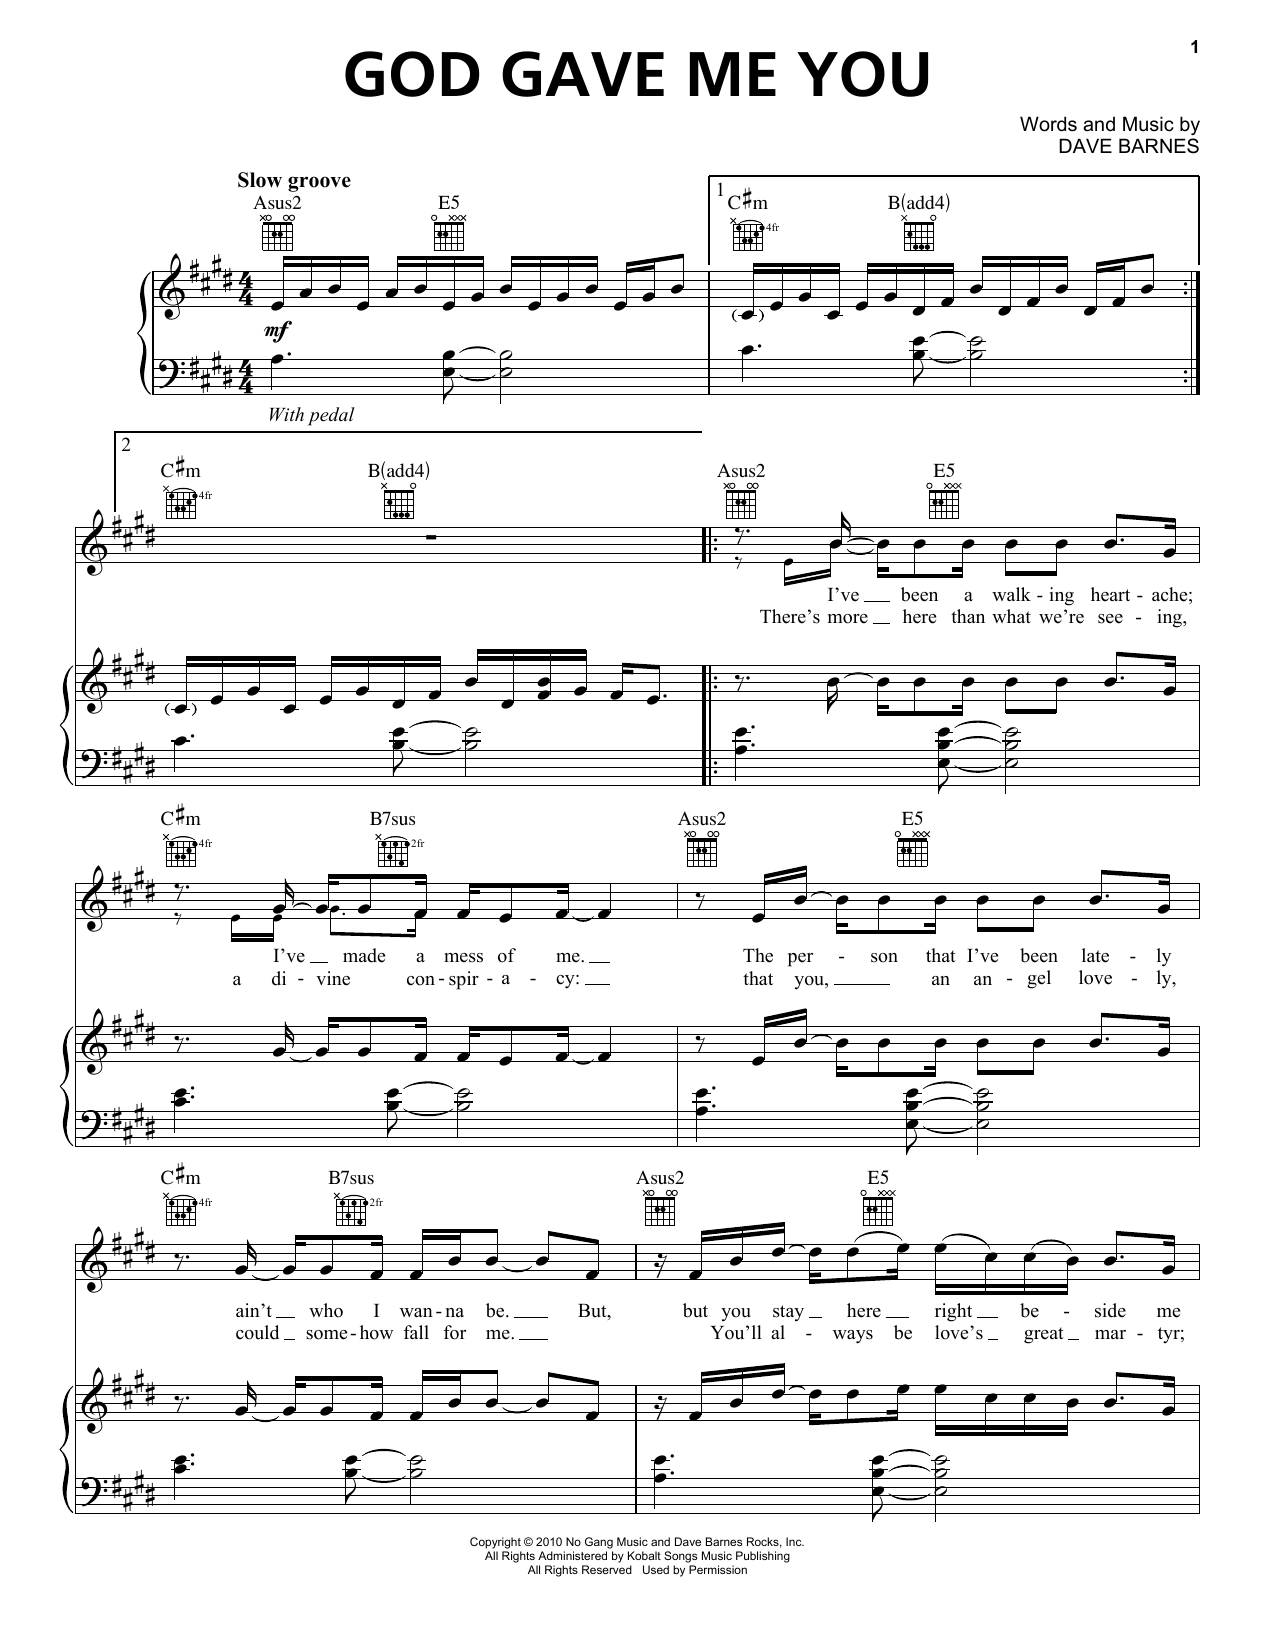 Blake Shelton God Gave Me You Sheet Music Notes & Chords for Piano - Download or Print PDF